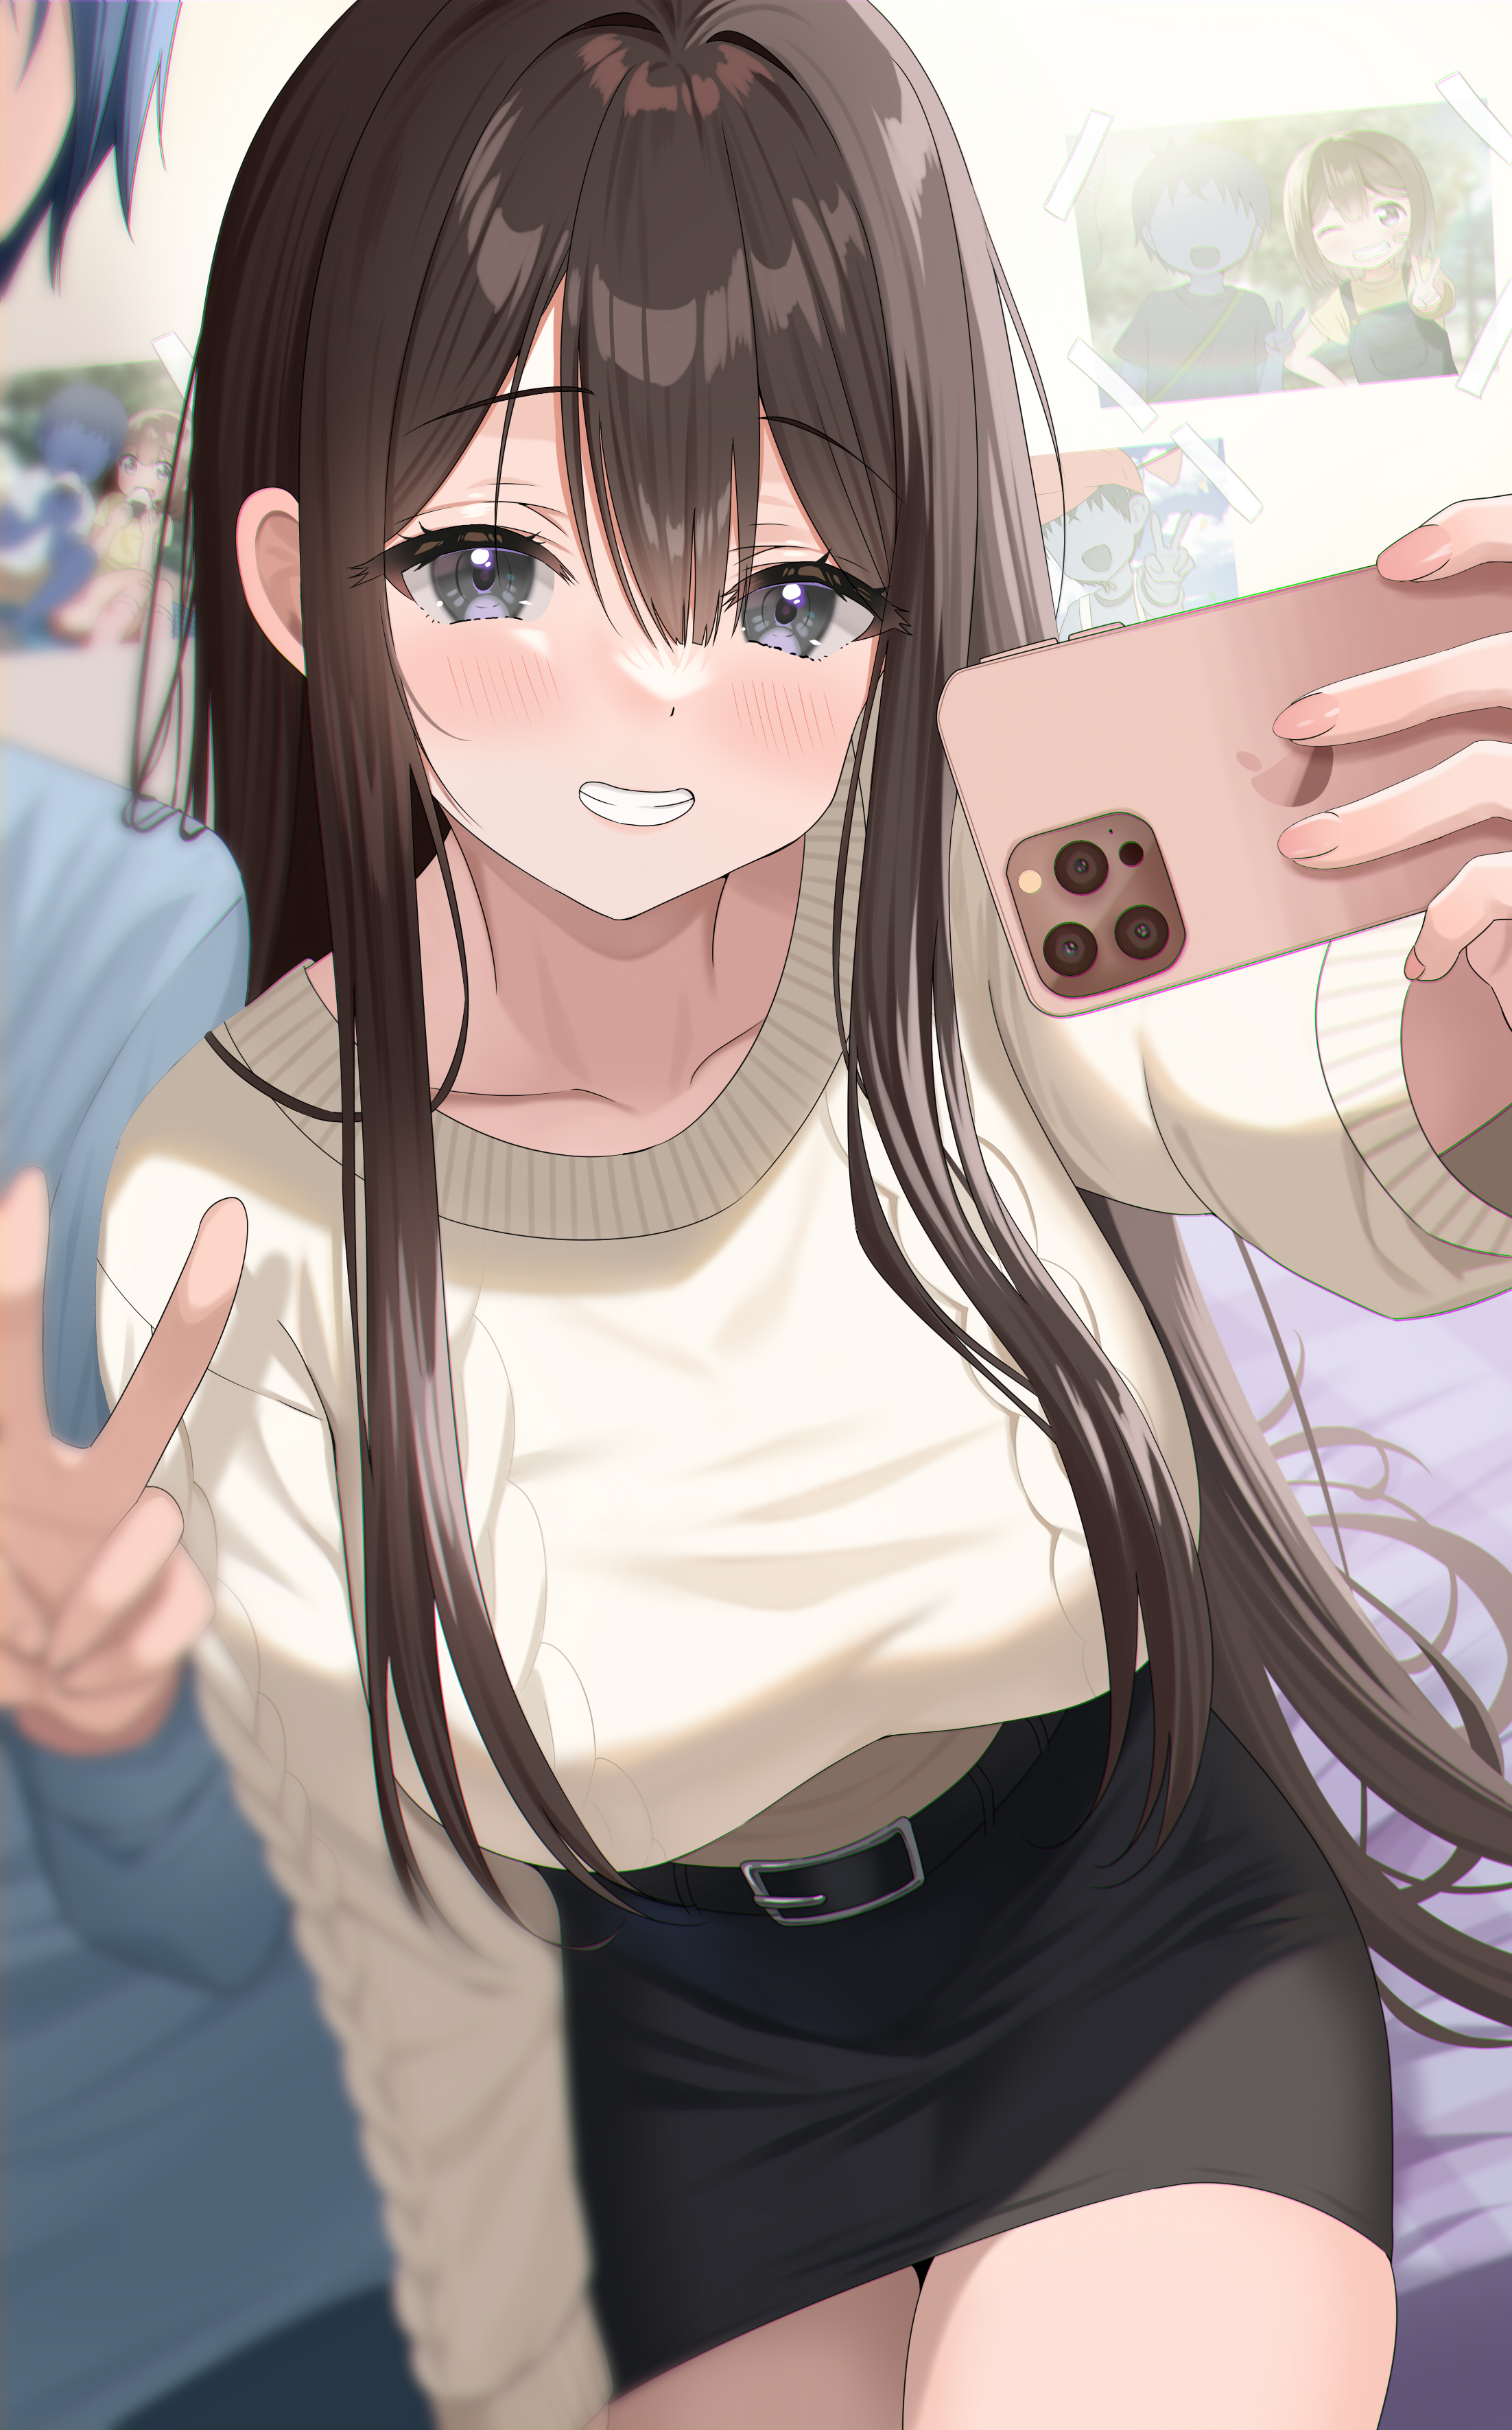 Anime 2204x3541 anime anime girls portrait display phone peace sign selfies brunette blue eyes smiling anime boys